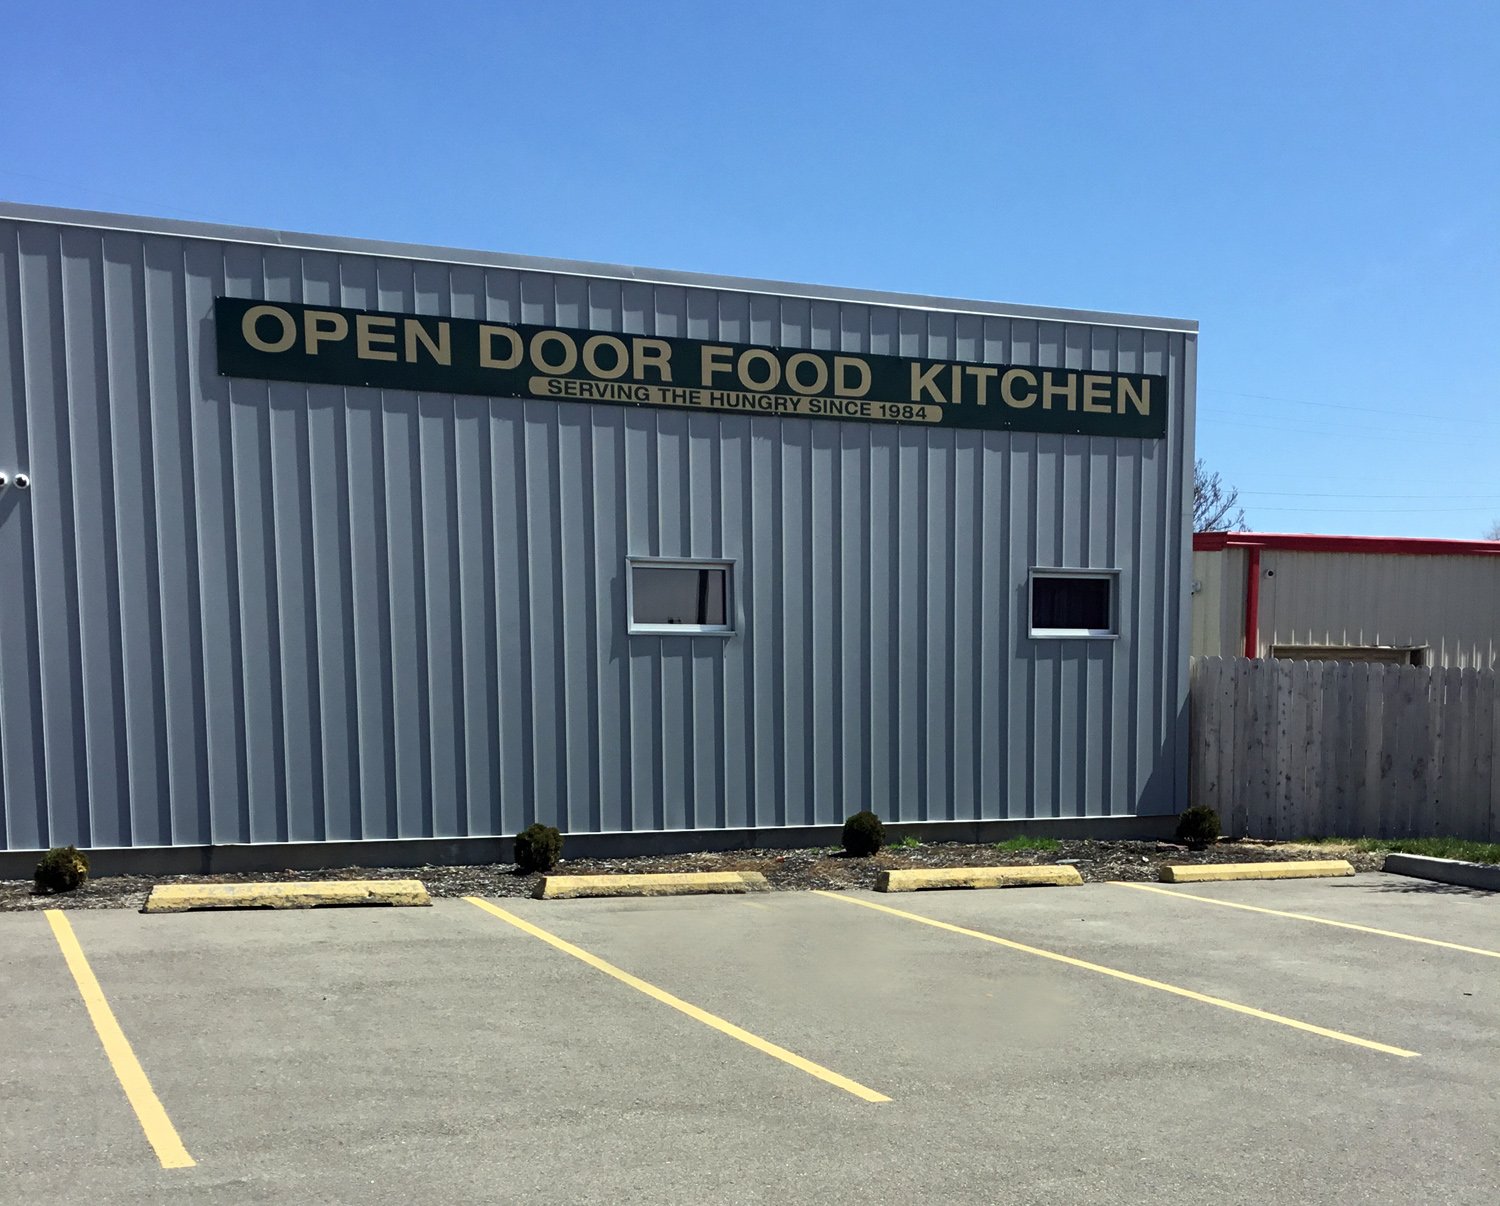 Open Door Food Kitchen Sign - First Presbyterian Church of St. Joseph Missouri.jpg